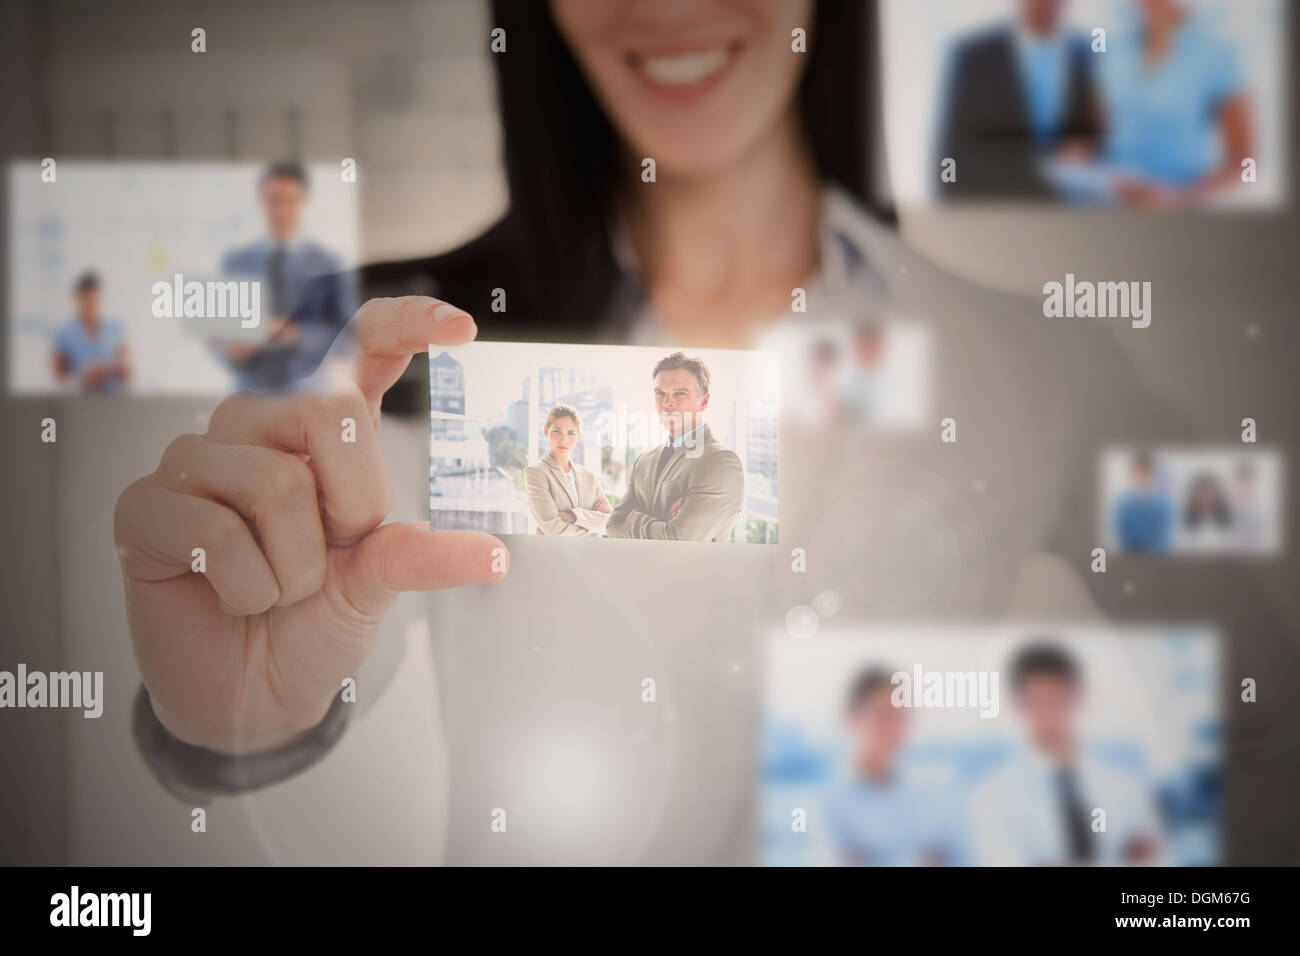 Businesswoman using futuristic interface Stock Photo